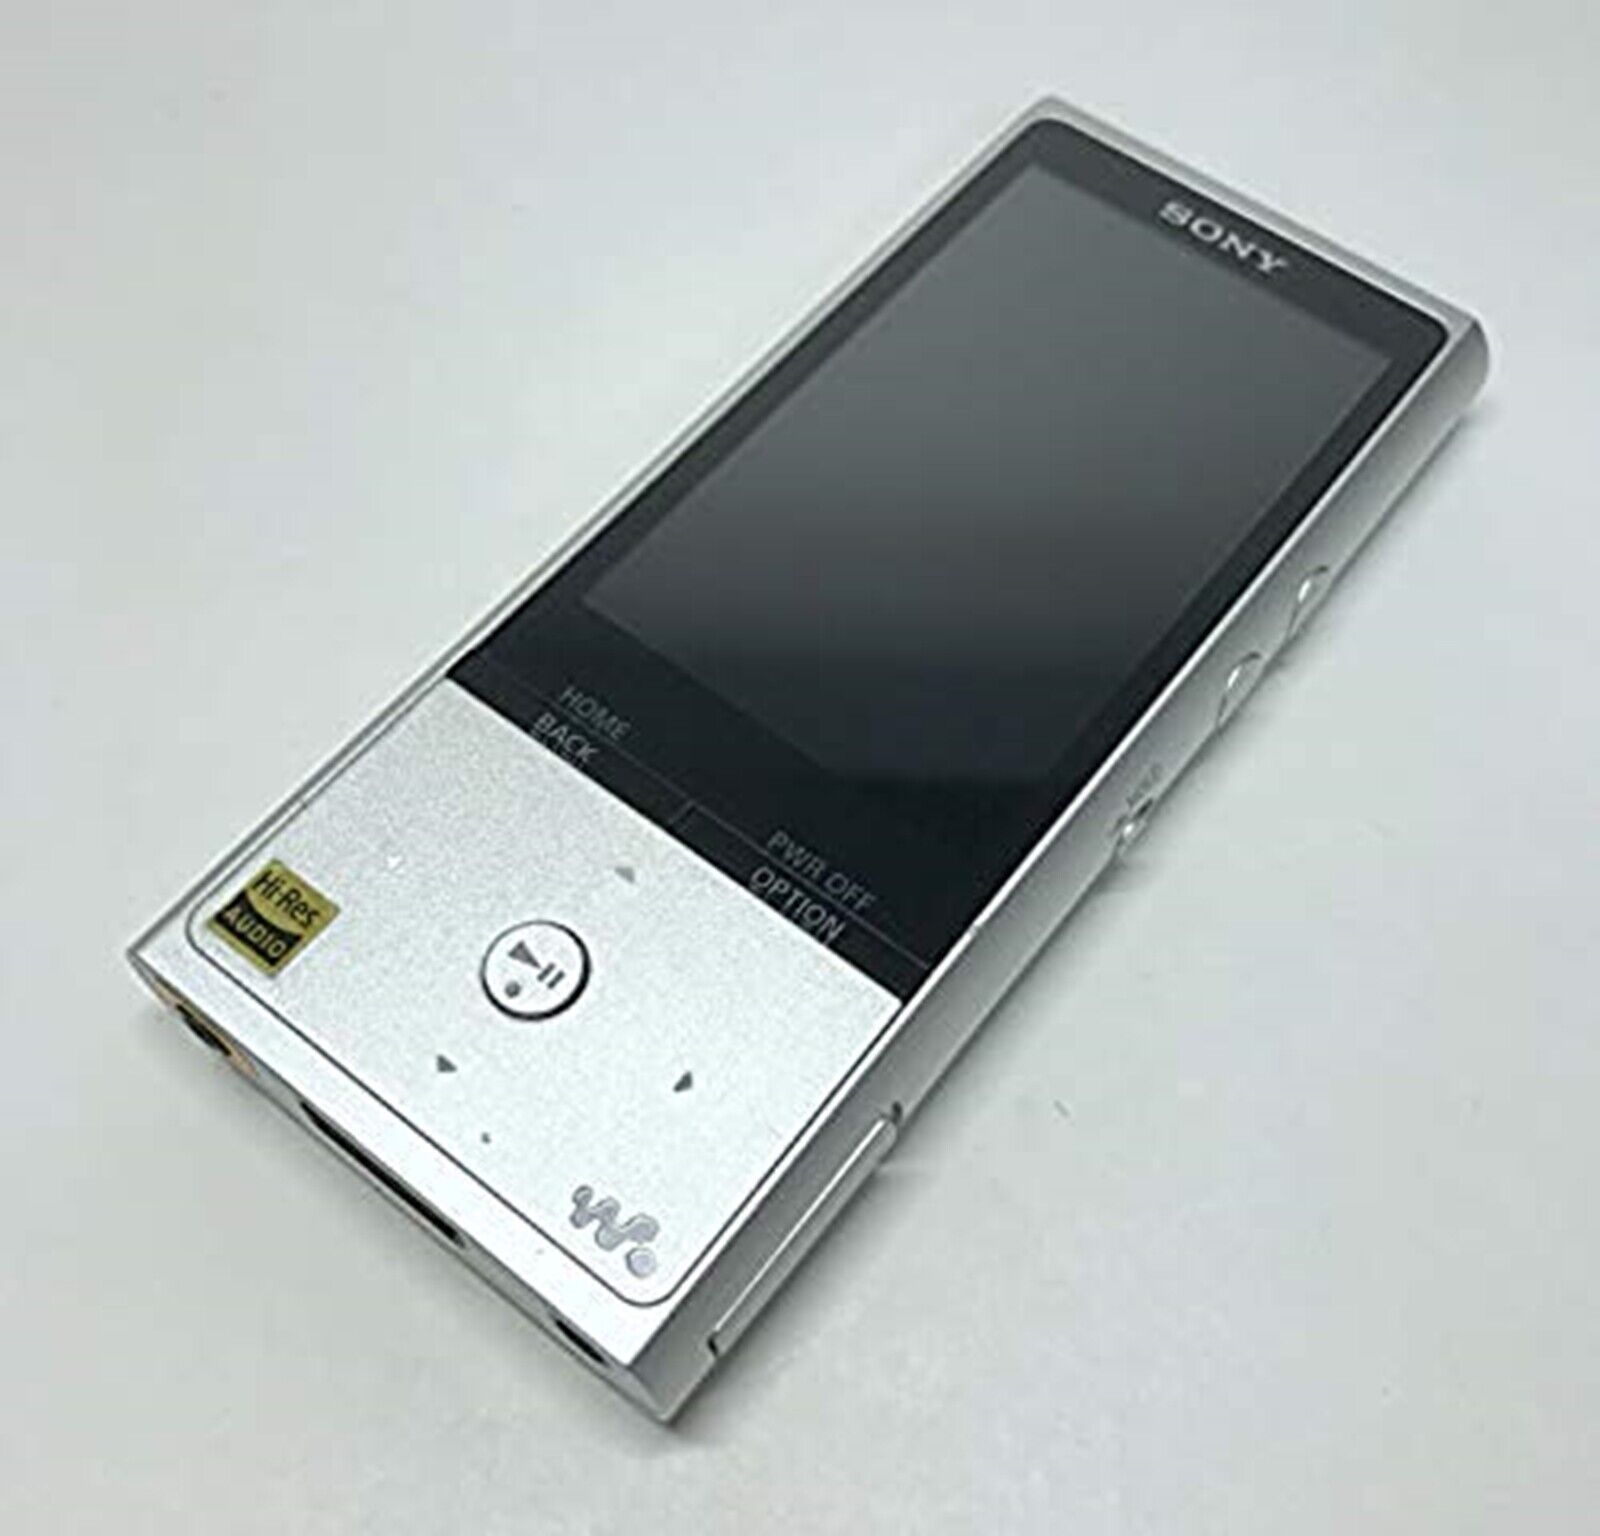 Sony Nw-zx100 Silver Hi-res Walkman 128gb Digital Music Player for 